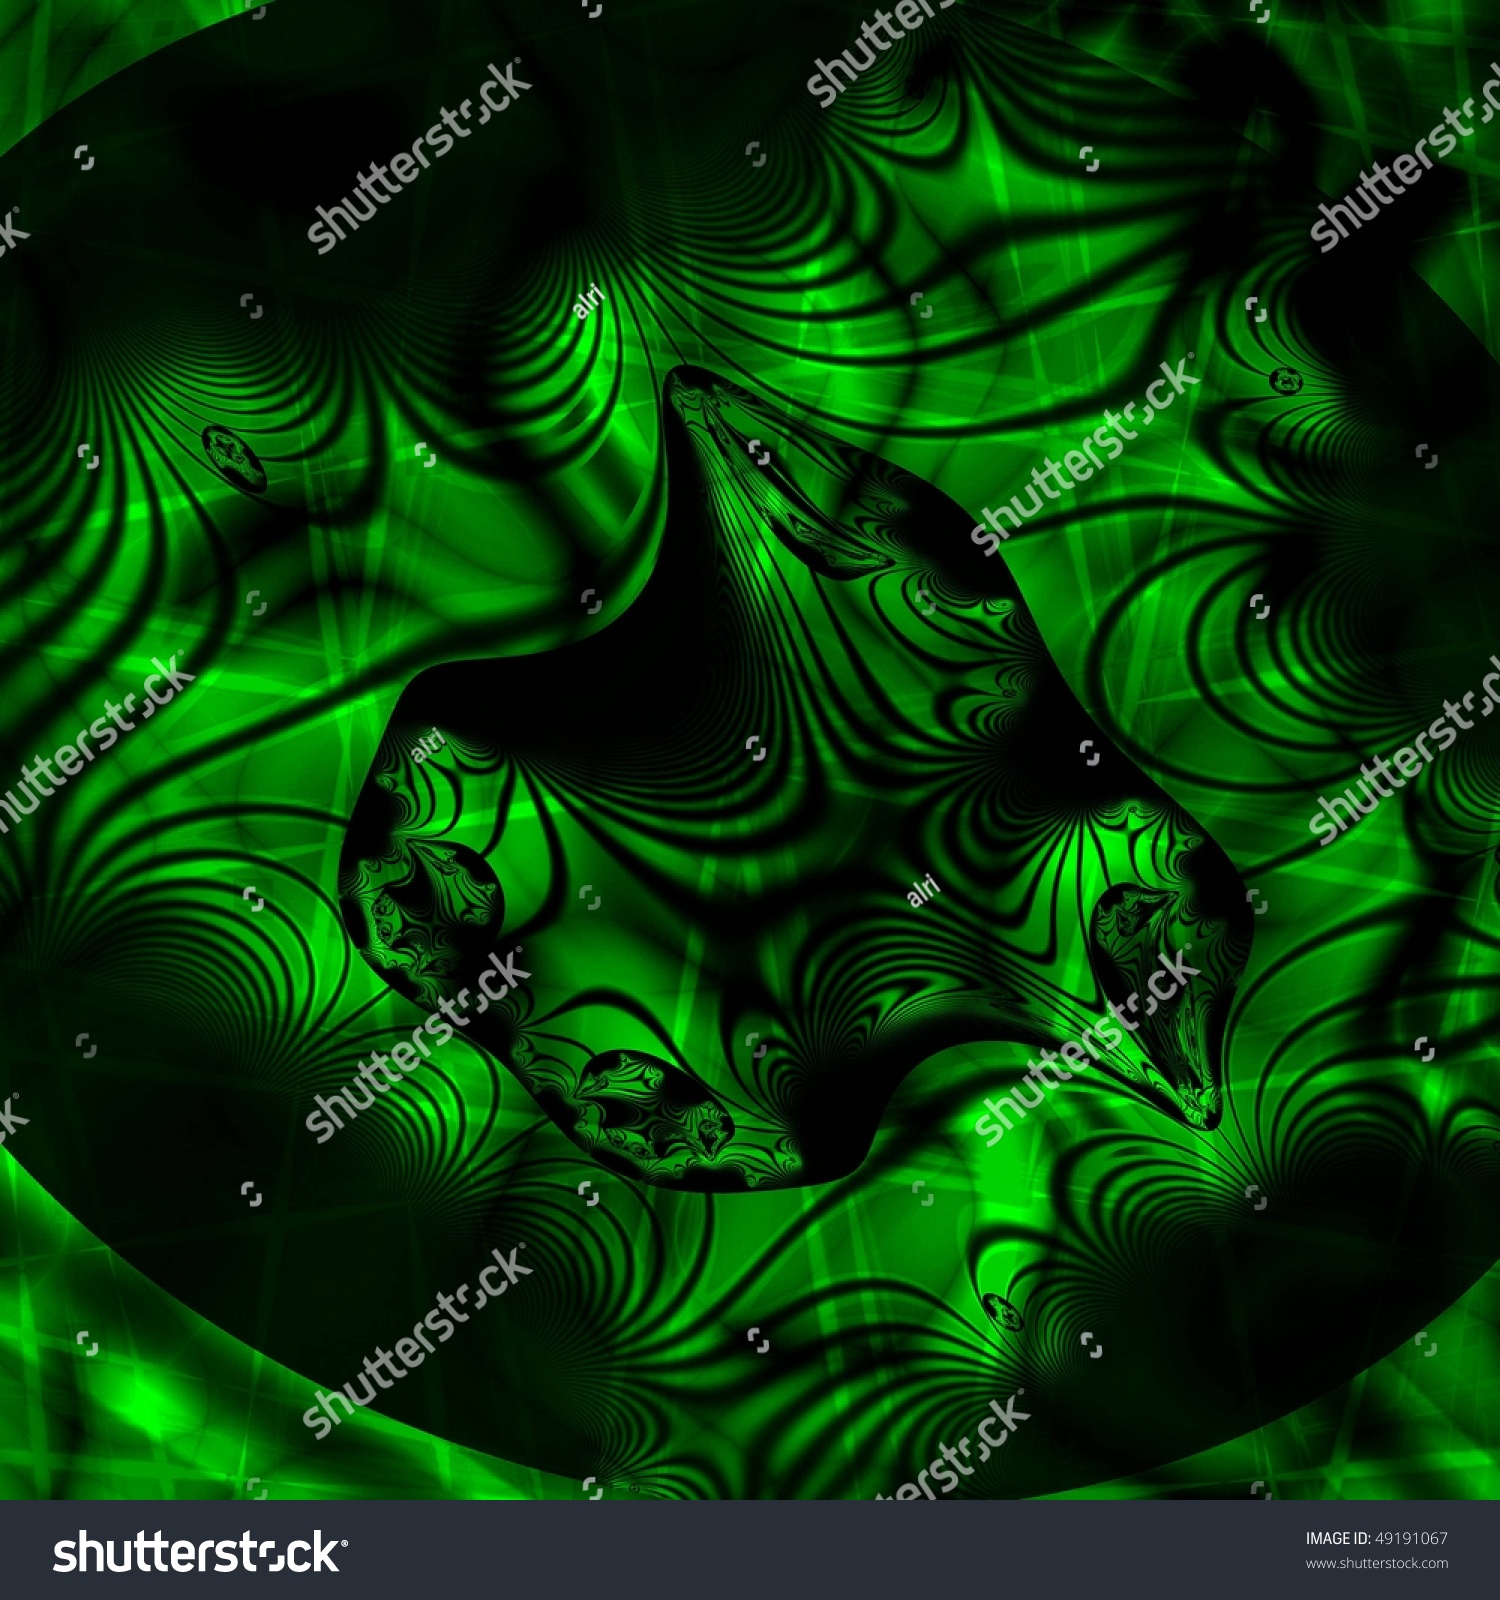 Dark Green Abstract Wallpaper Stock Photo 49191067 : Shutterstock